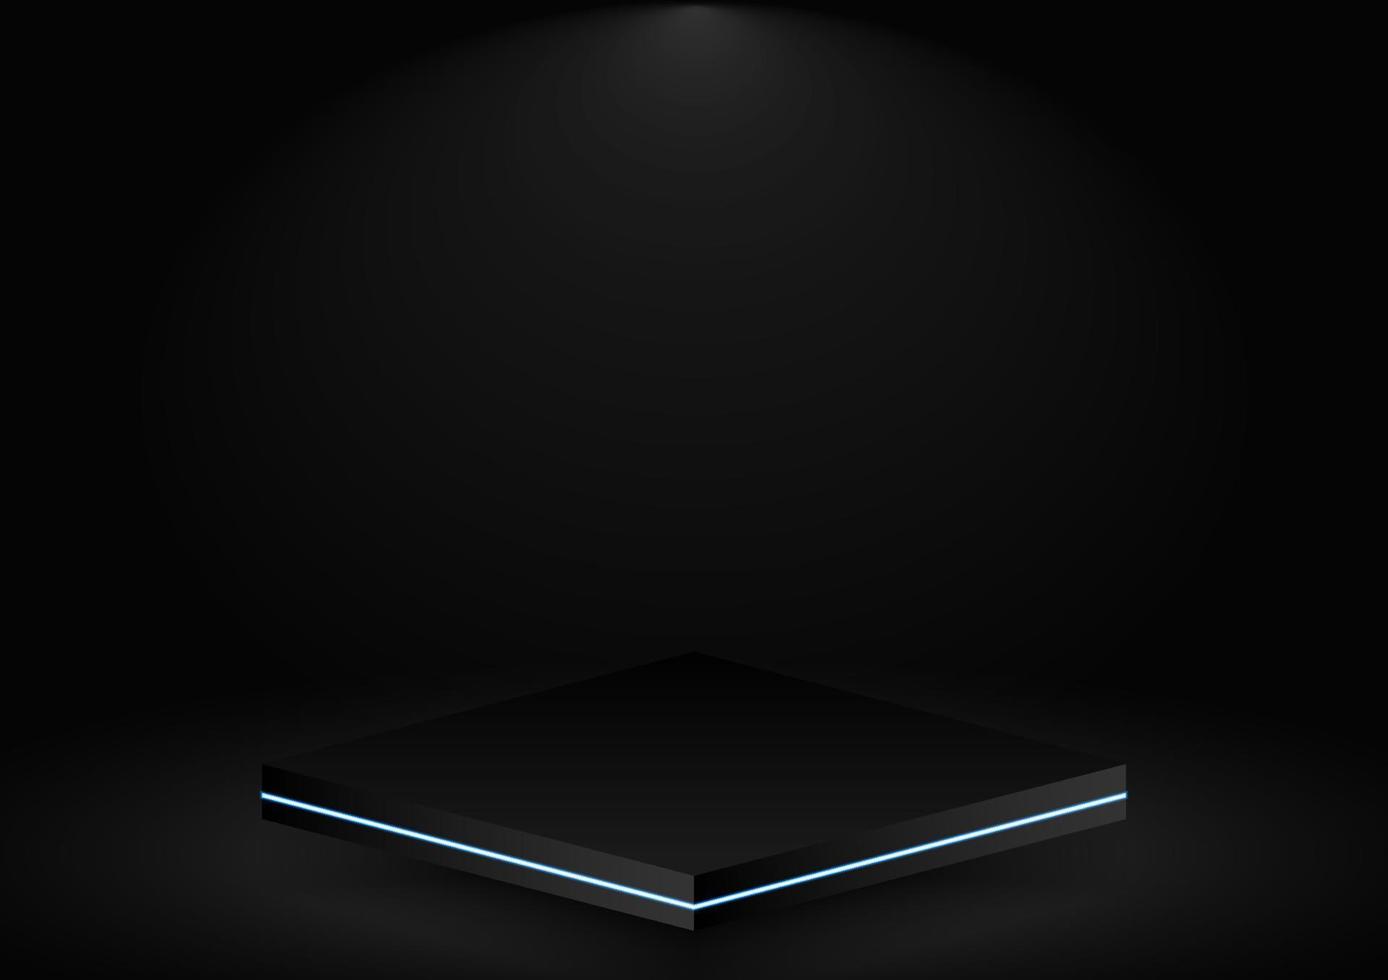 podium blue neon pedestal scene for product display vector